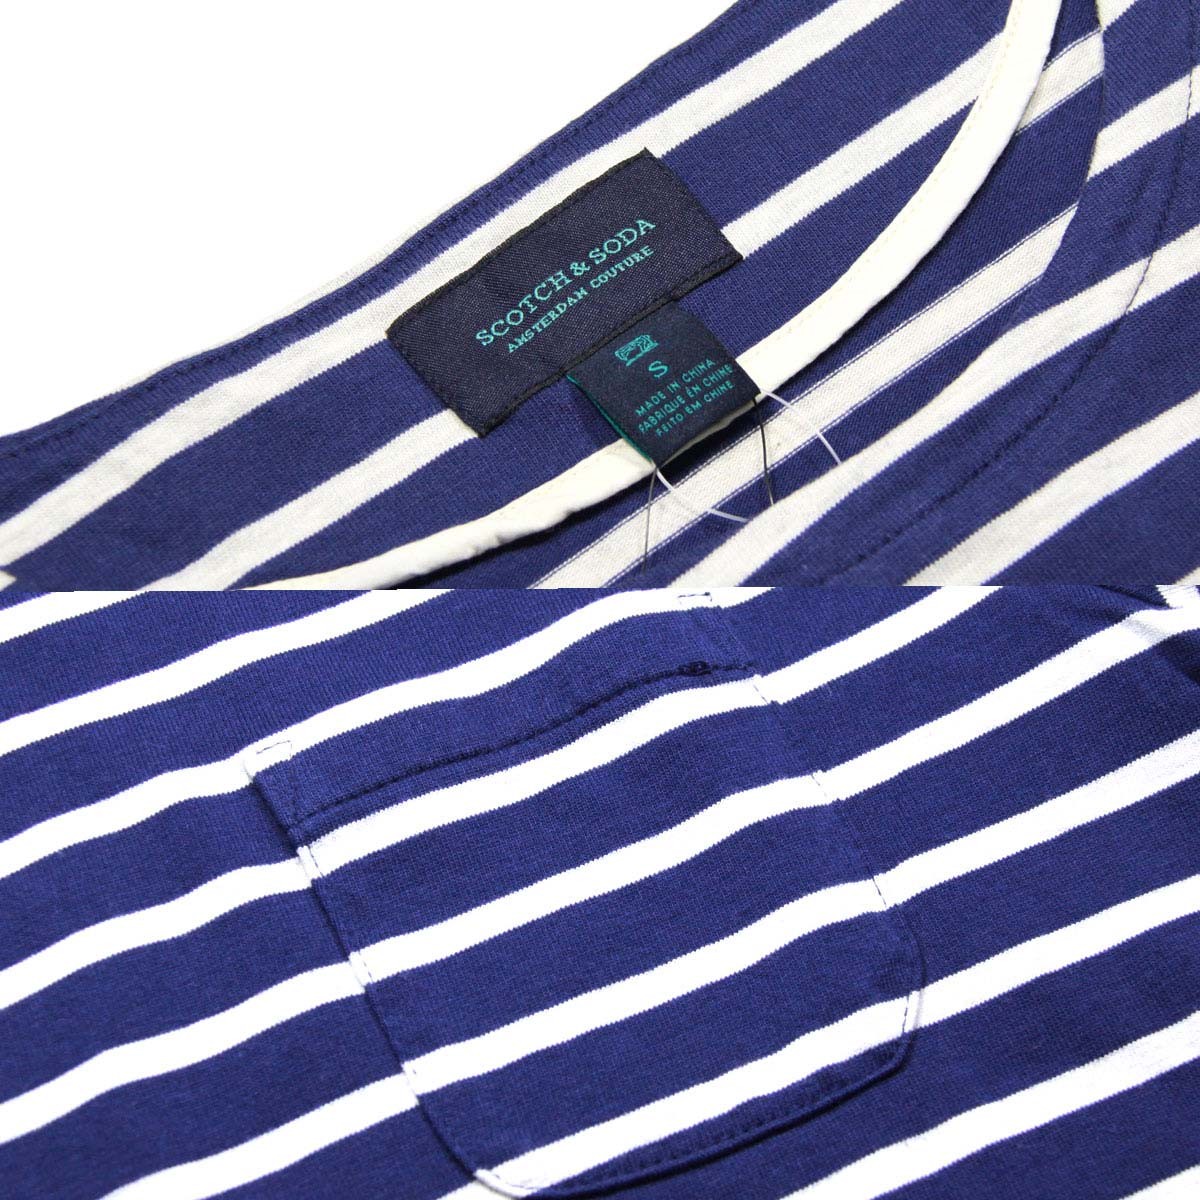 åɥ SCOTCHSODA  ĹµT Striped longsleeve tee with chestpocket and indigo collar50001B